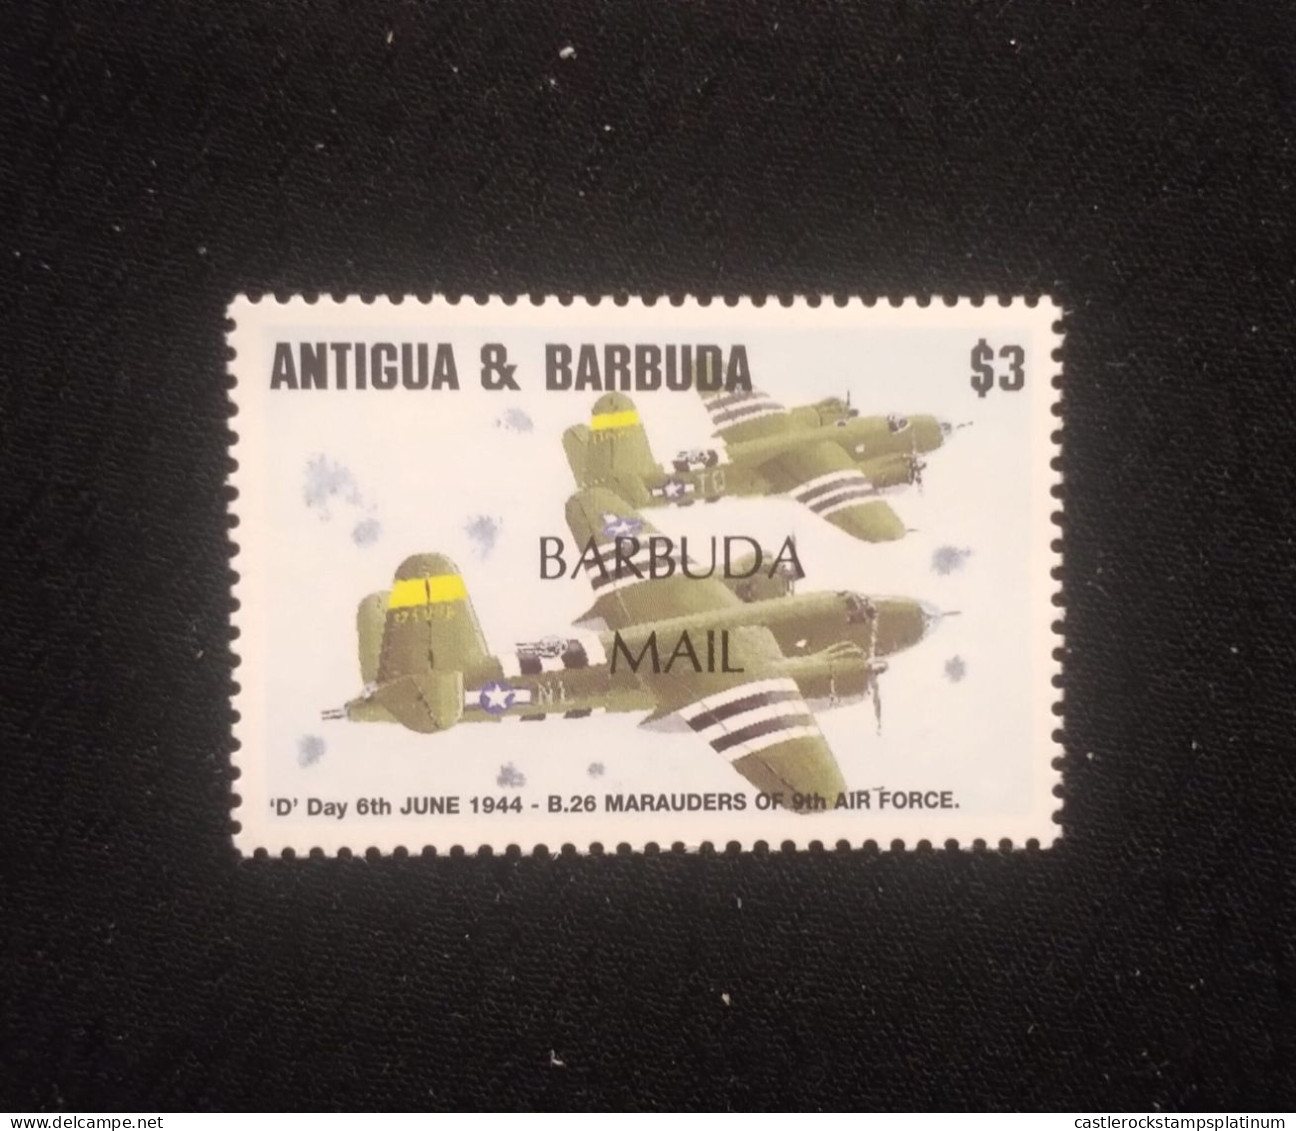 O) 1995 ANTIGUA AND BARBUDA, OLD WAR AIRCRAFT - TWIN-ENGINE BOMBER, MNH - Antigua Et Barbuda (1981-...)